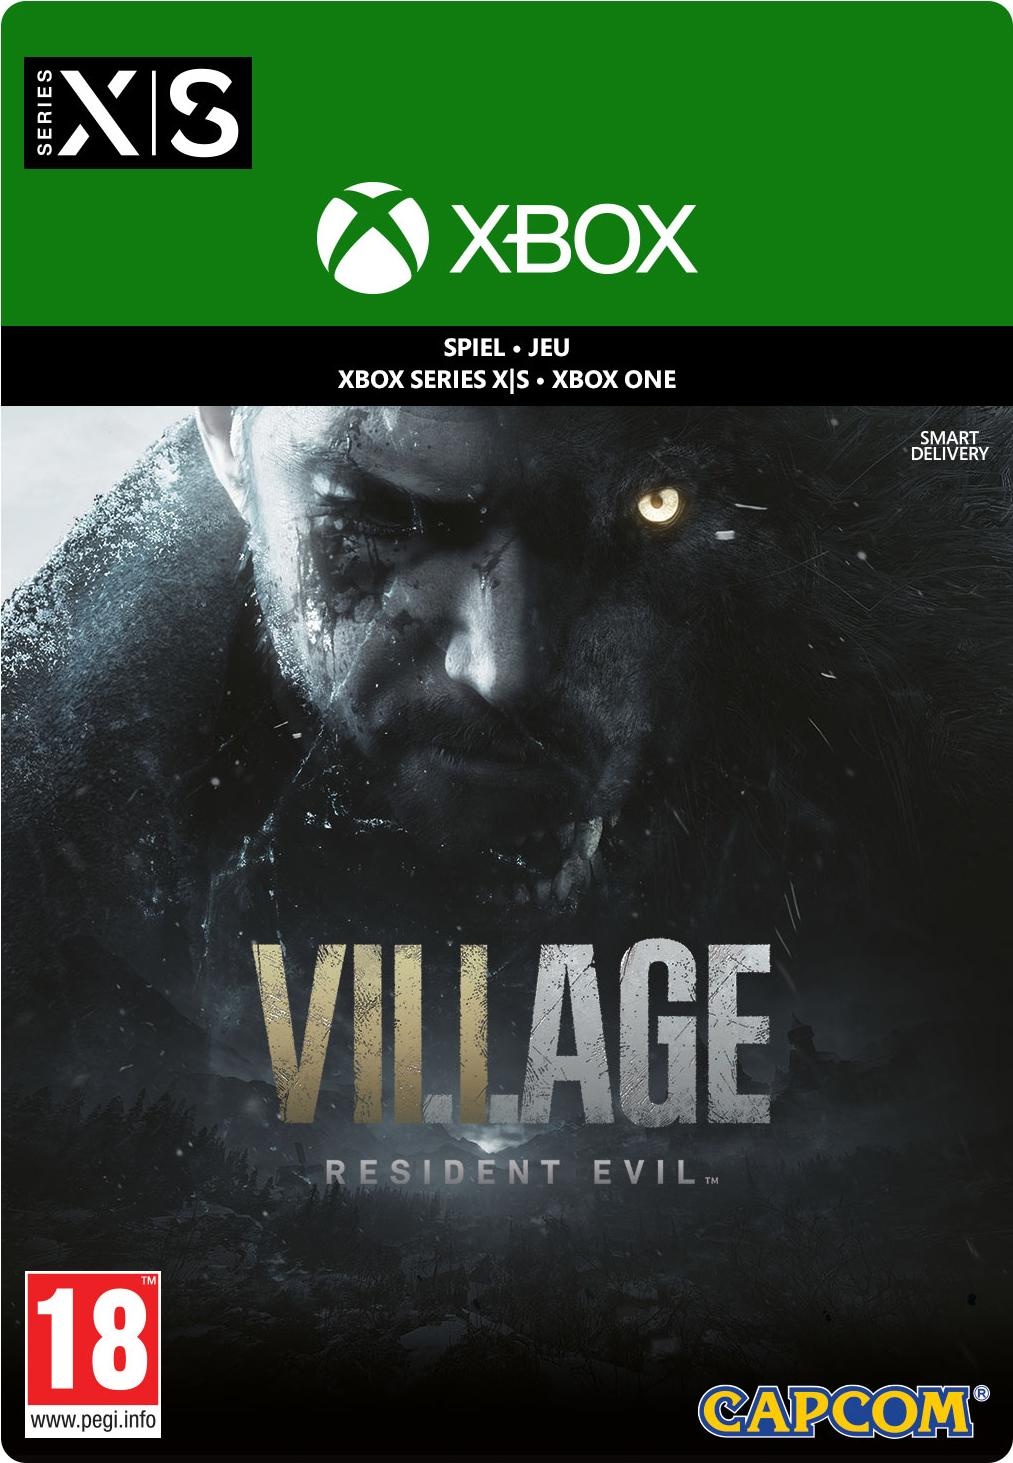 Resident Evil Village (Xbox One X, Xbox Series X, Xbox One S, Xbox Series S) zum Sofortdownload